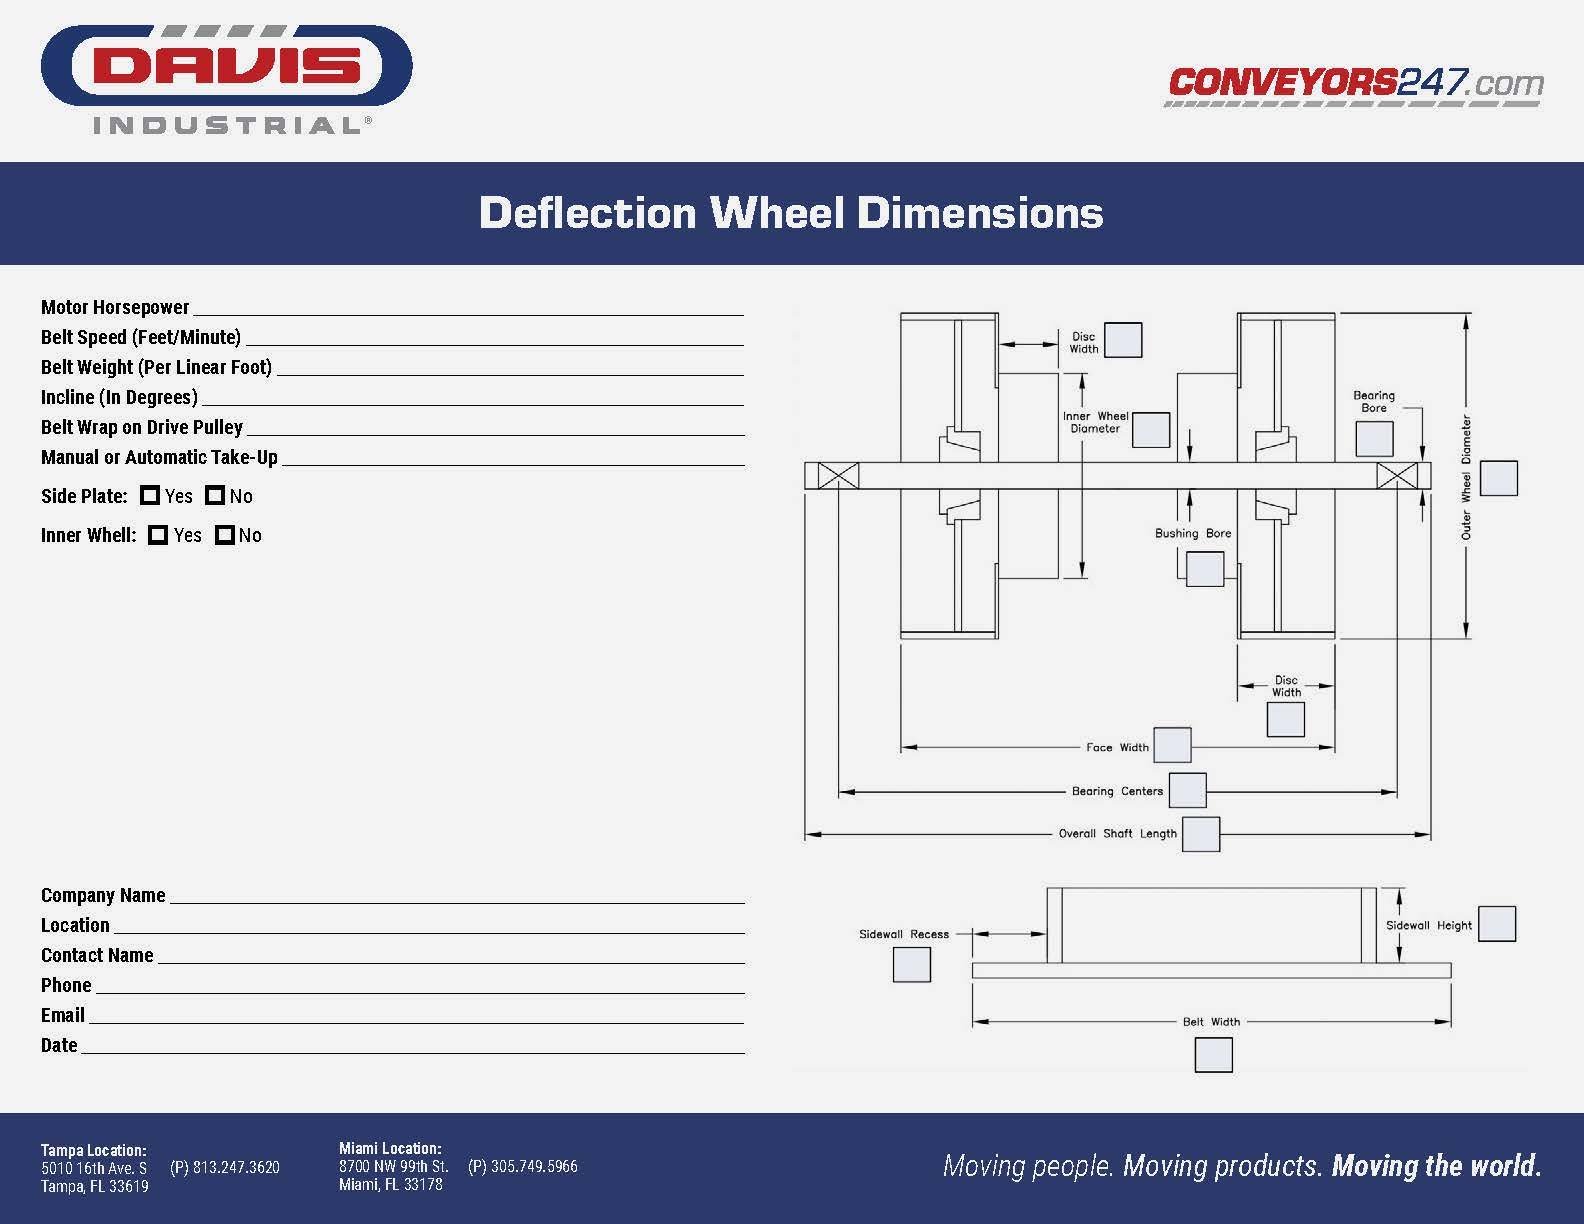 Davis_Deflection Wheel Dimensions